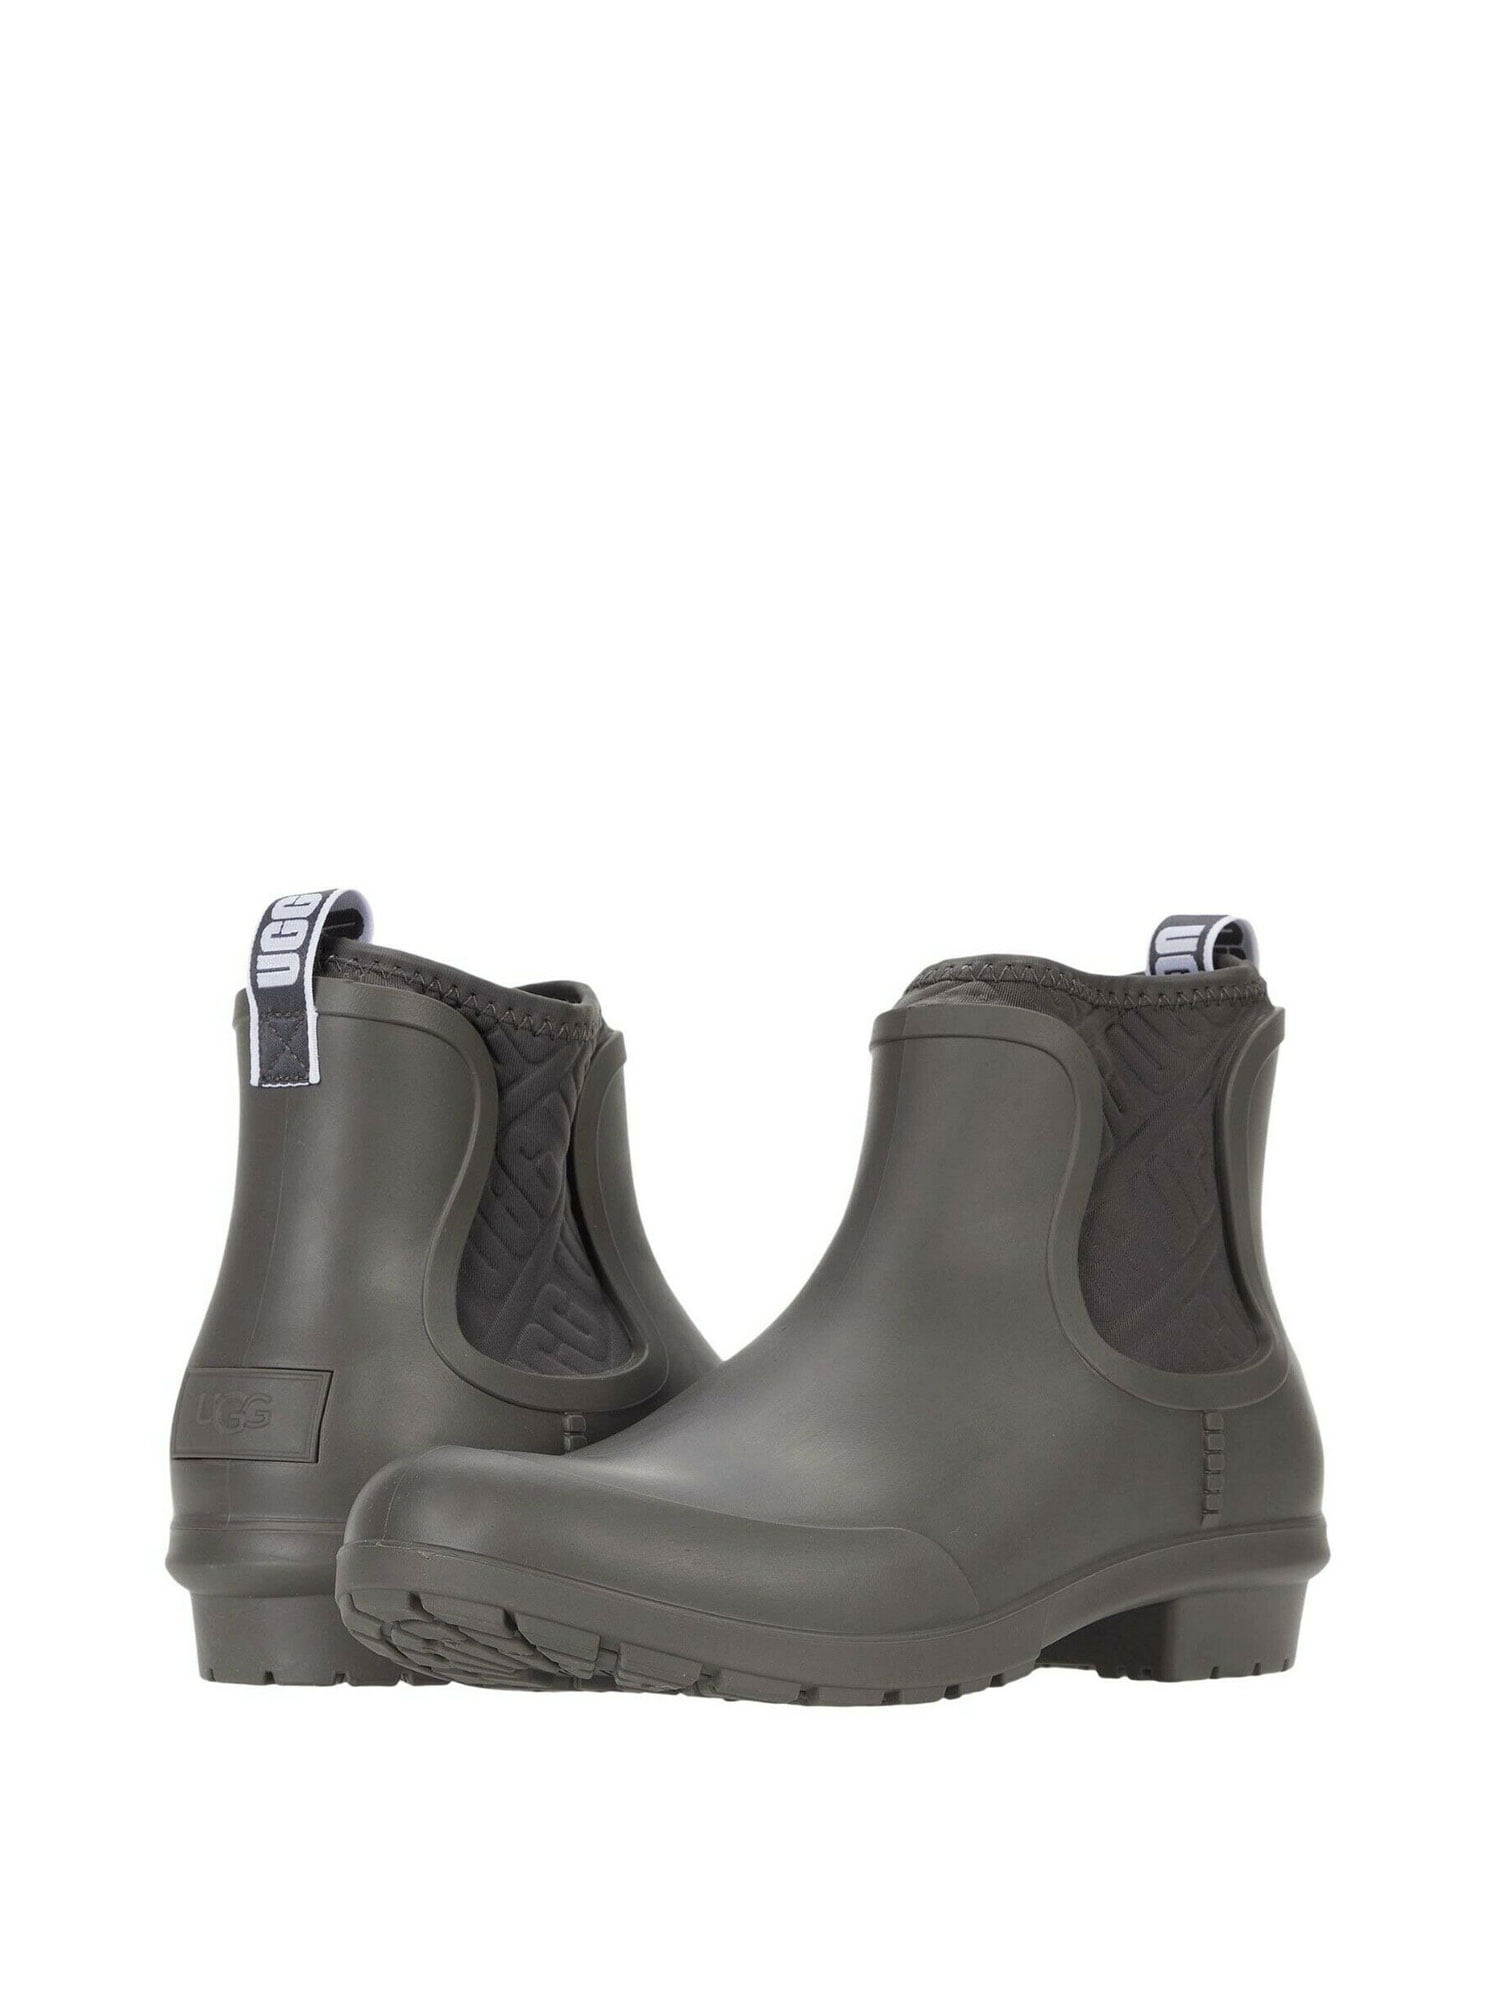 ugg leather rain boots